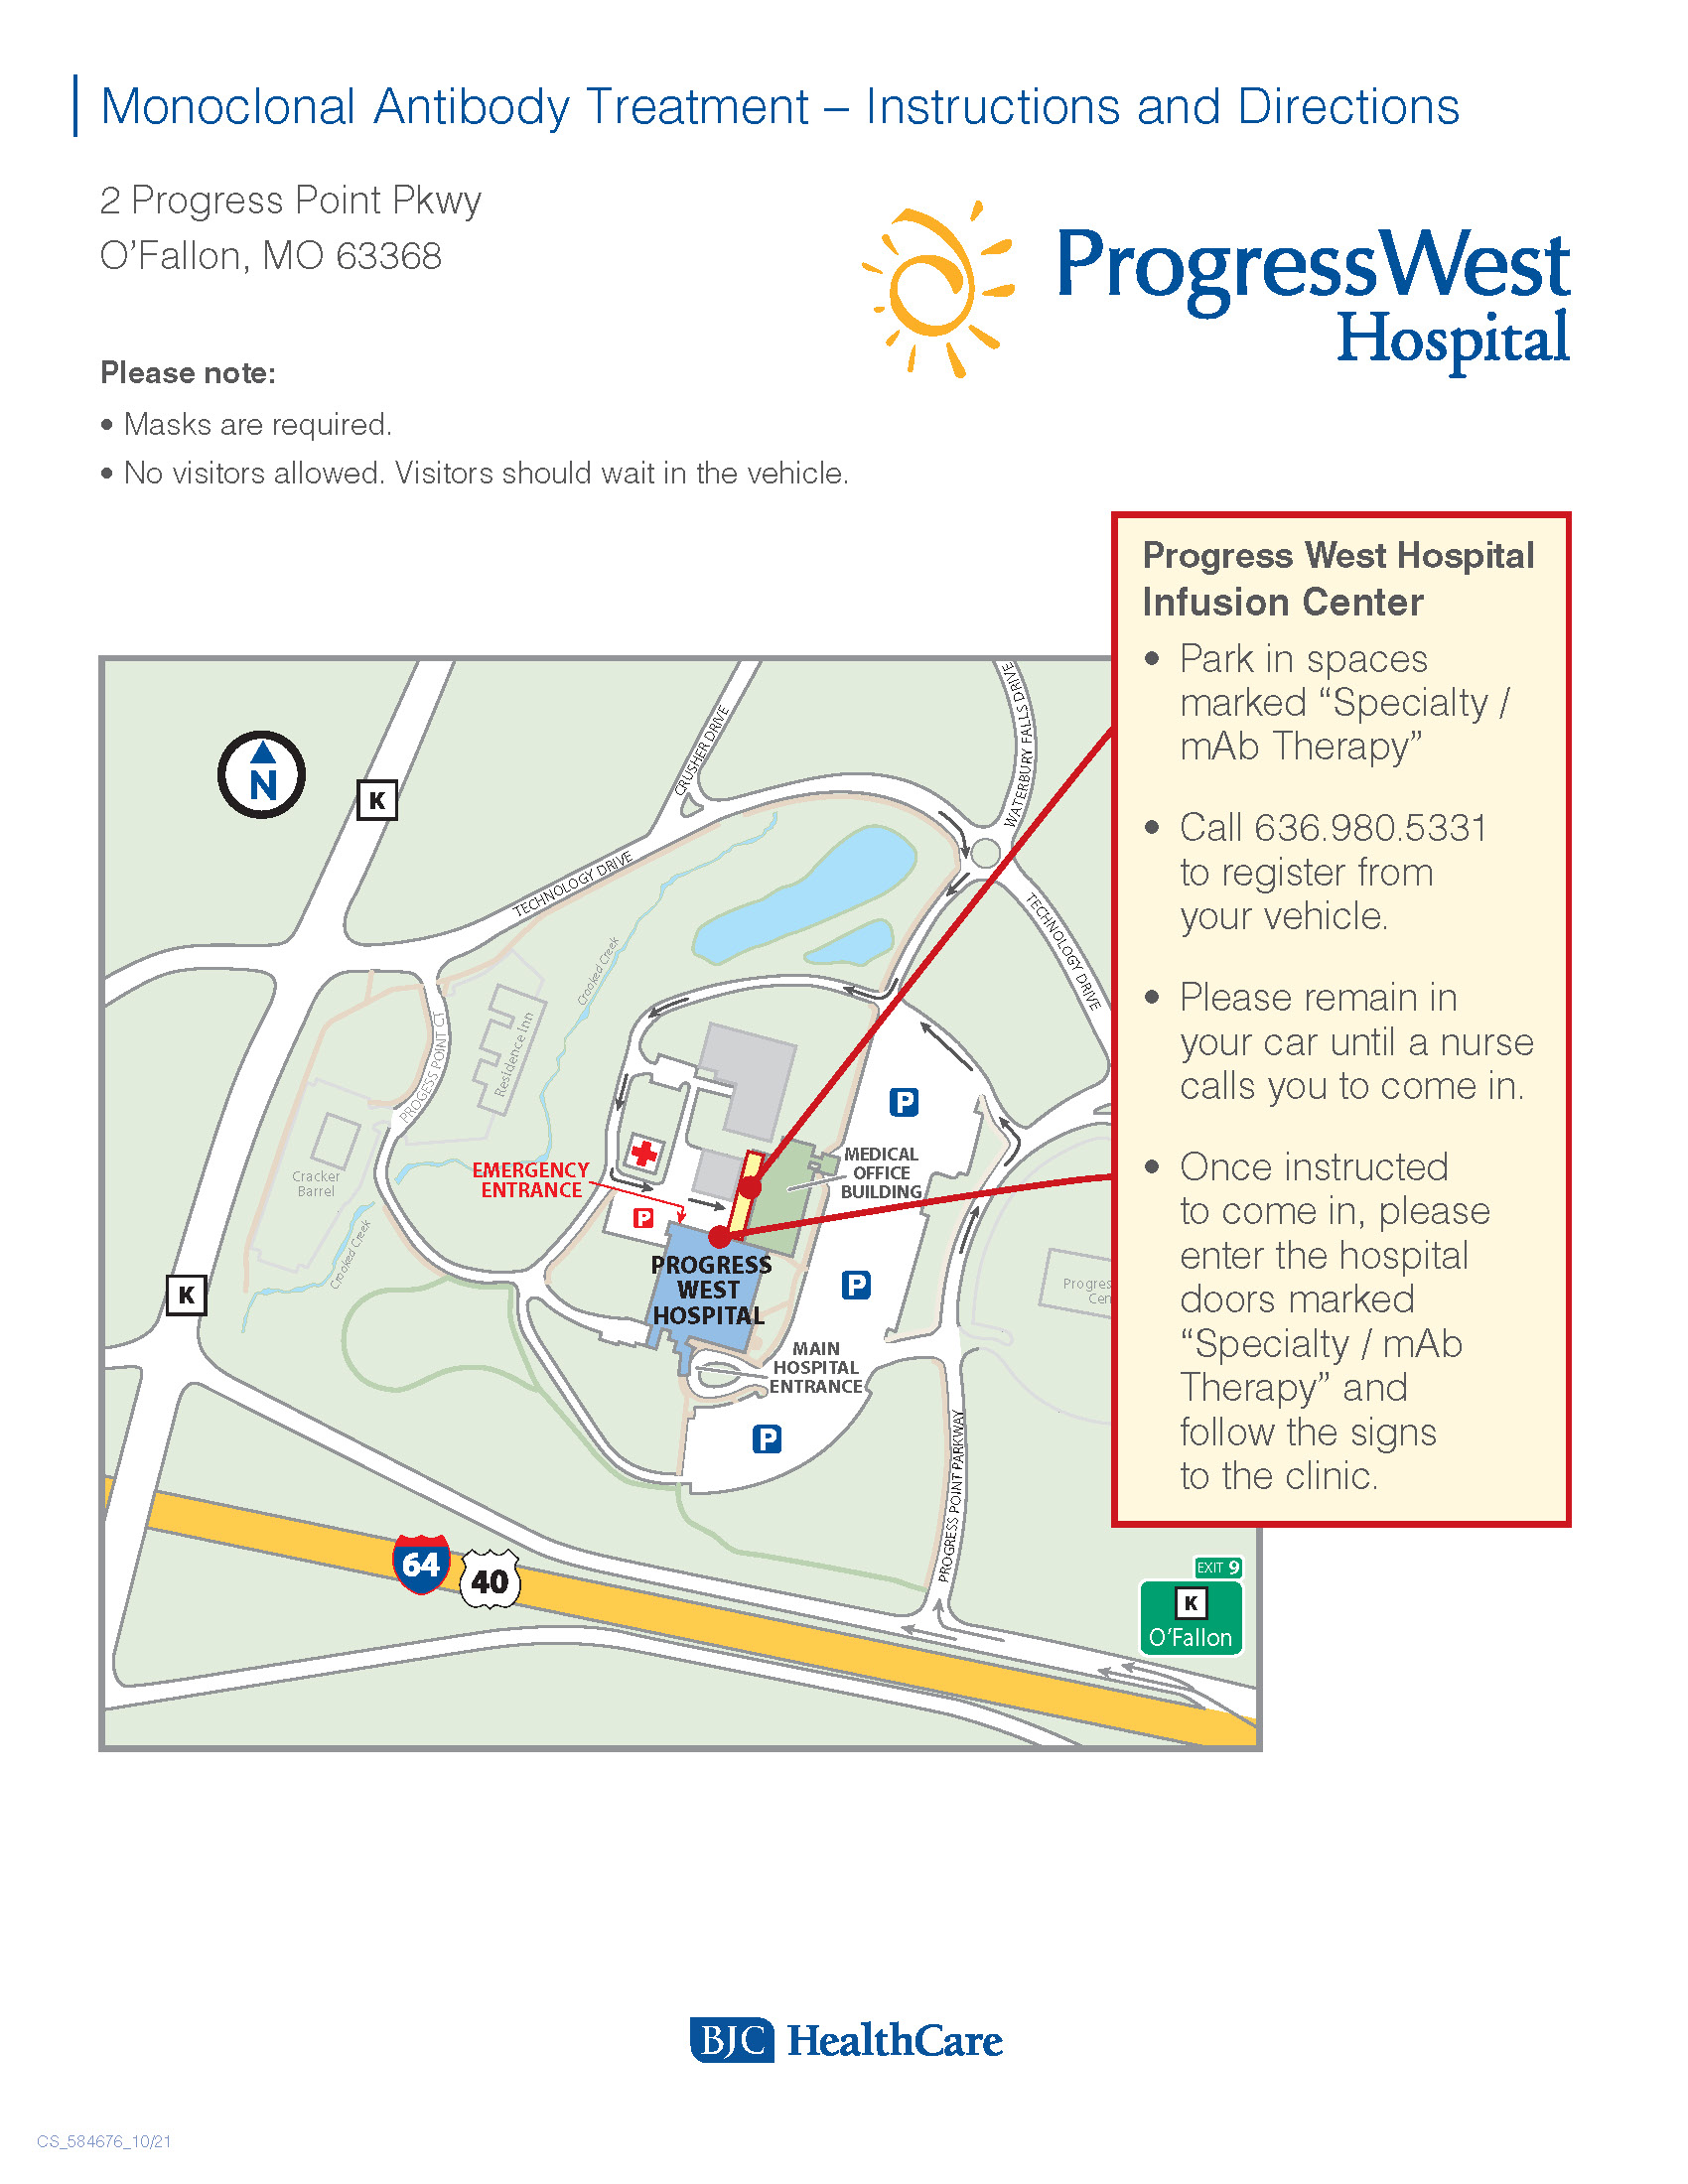 Progress West Hospital parking instructions